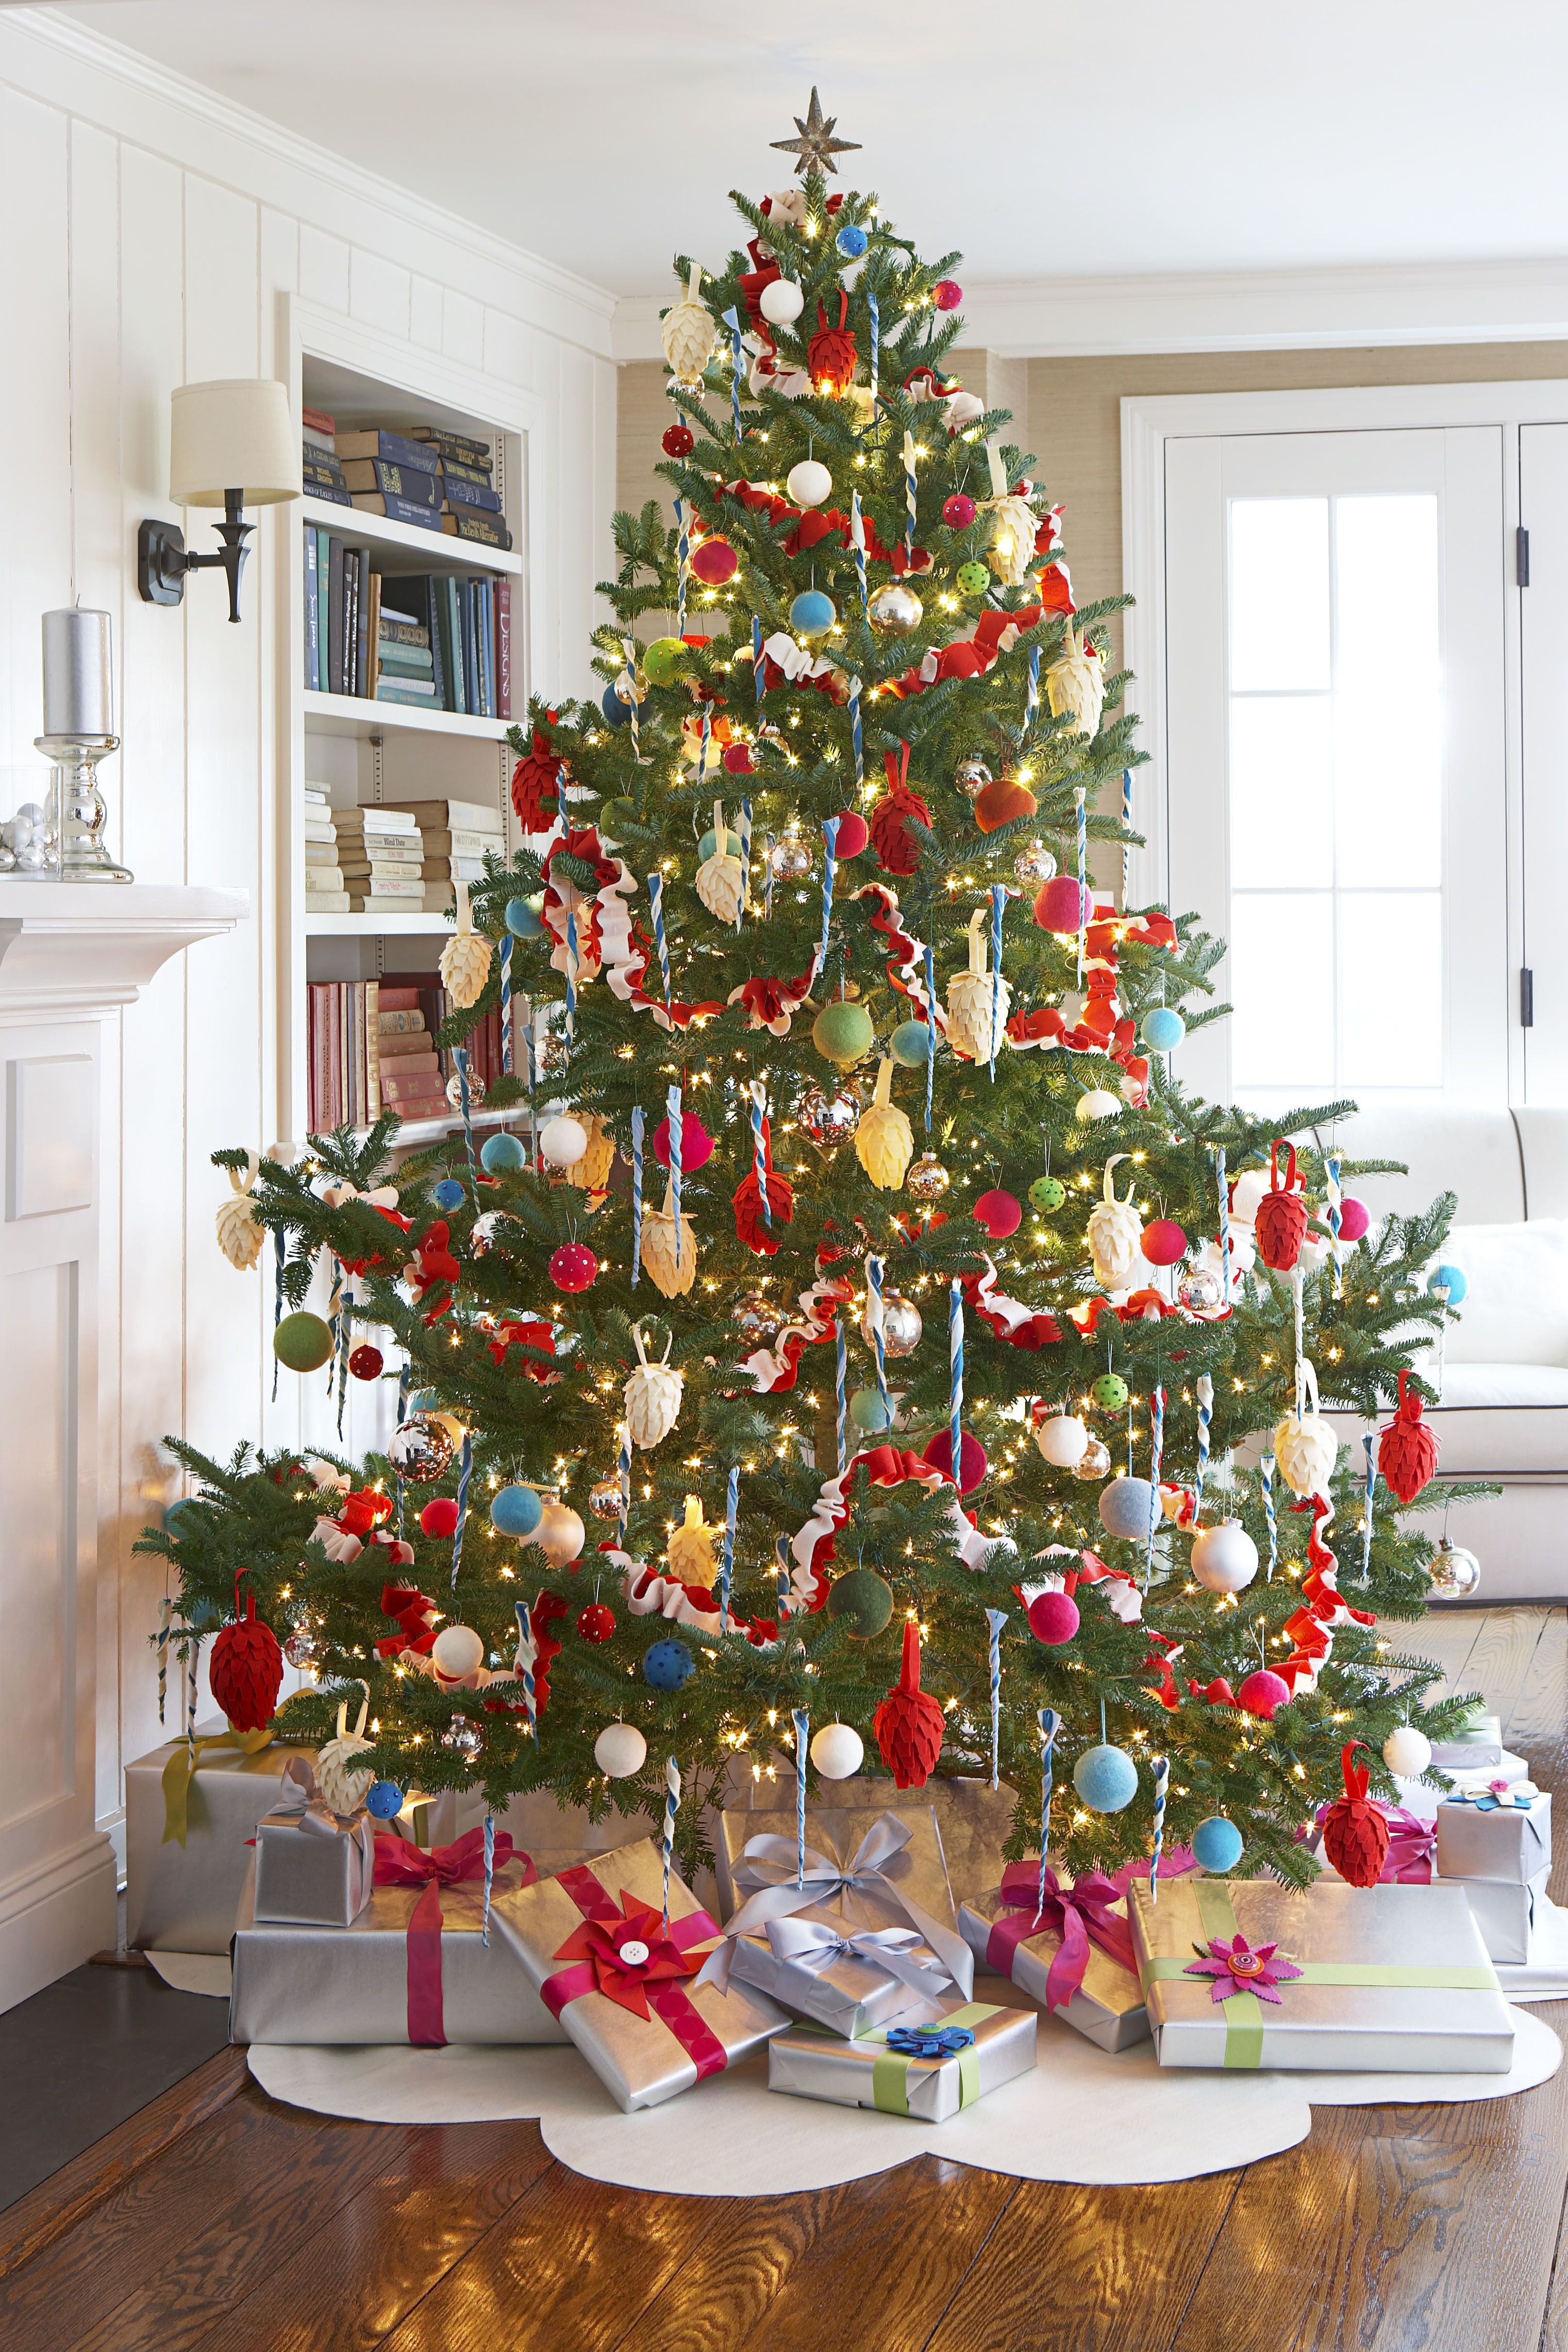 40 Unique Christmas Tree Decorations - 2017 Ideas for Decorating ...